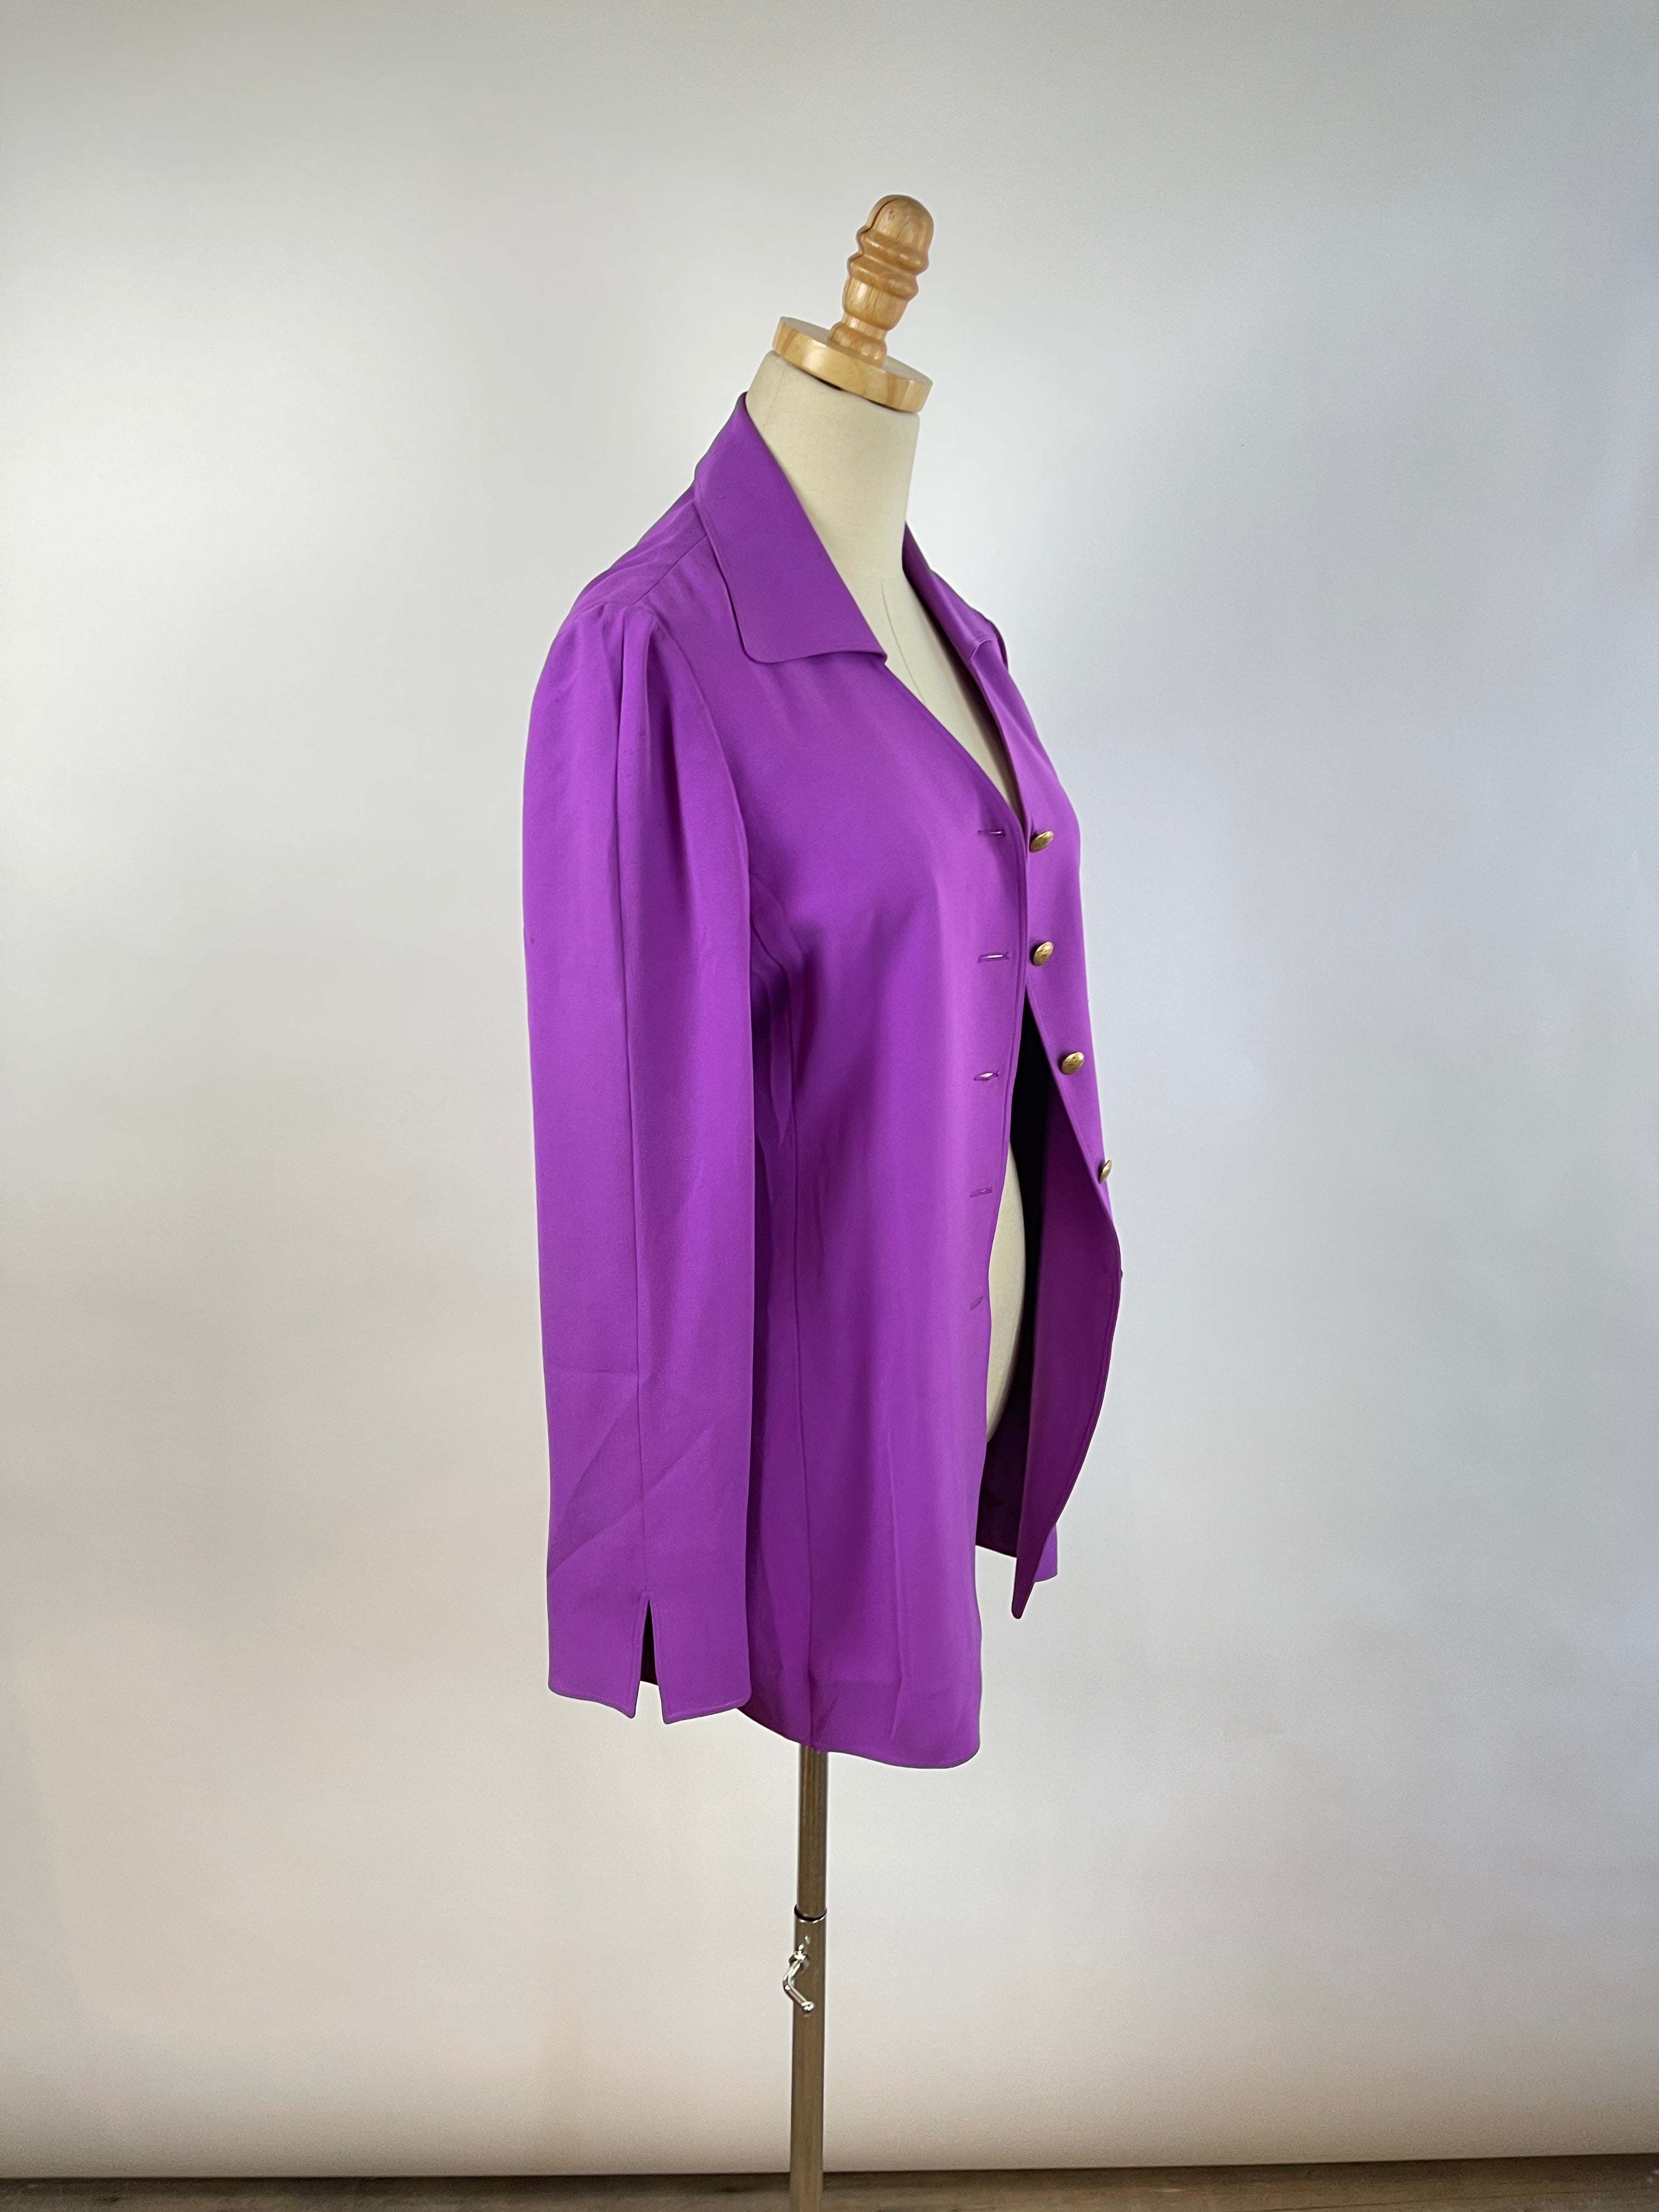 Vintage Purple Dana Buchman Silk Blazer (XS/S)